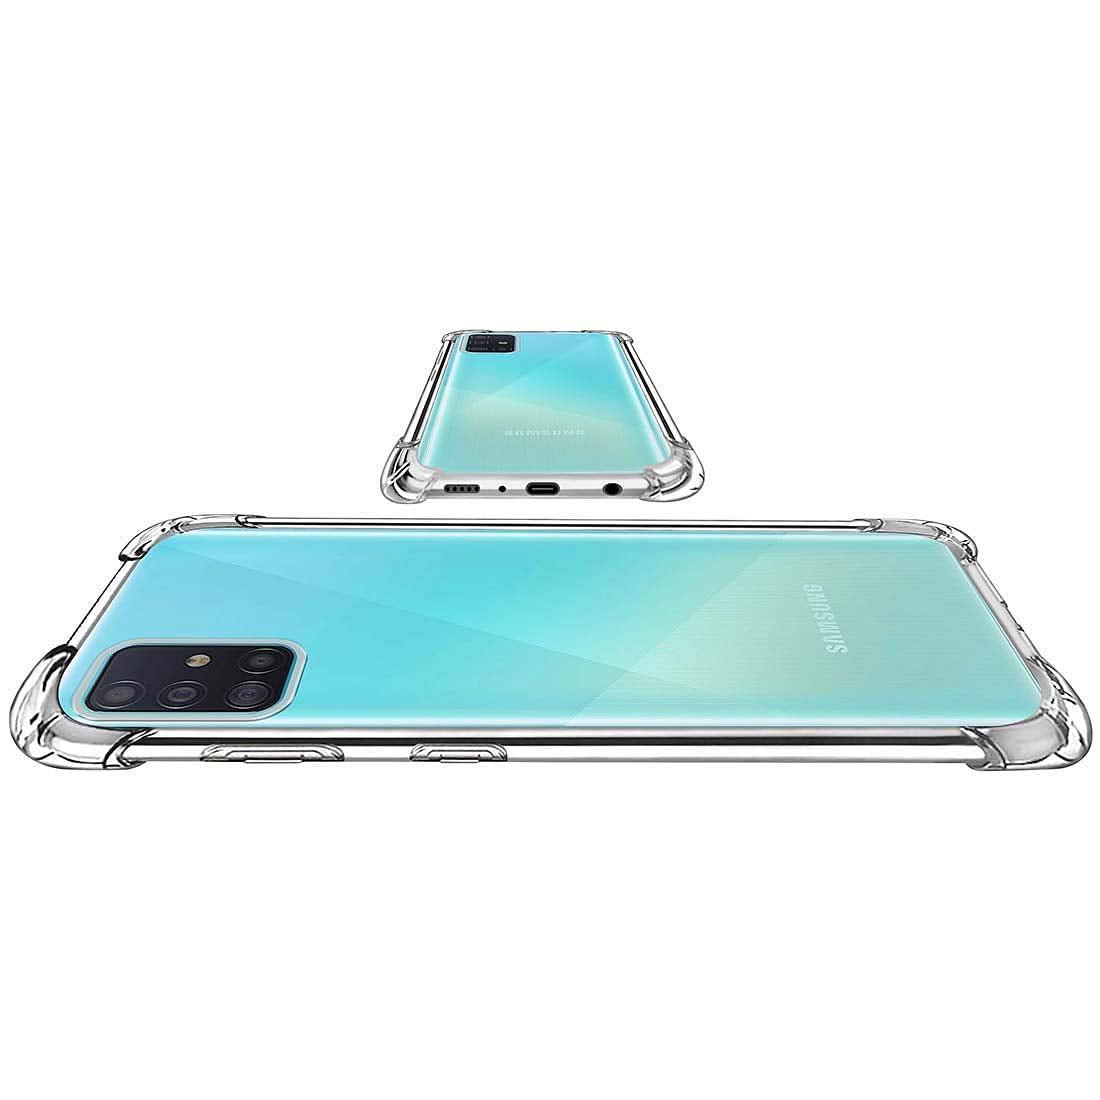 Samsung Galaxy A51 Back Cover Case Soft Transparent Stylish